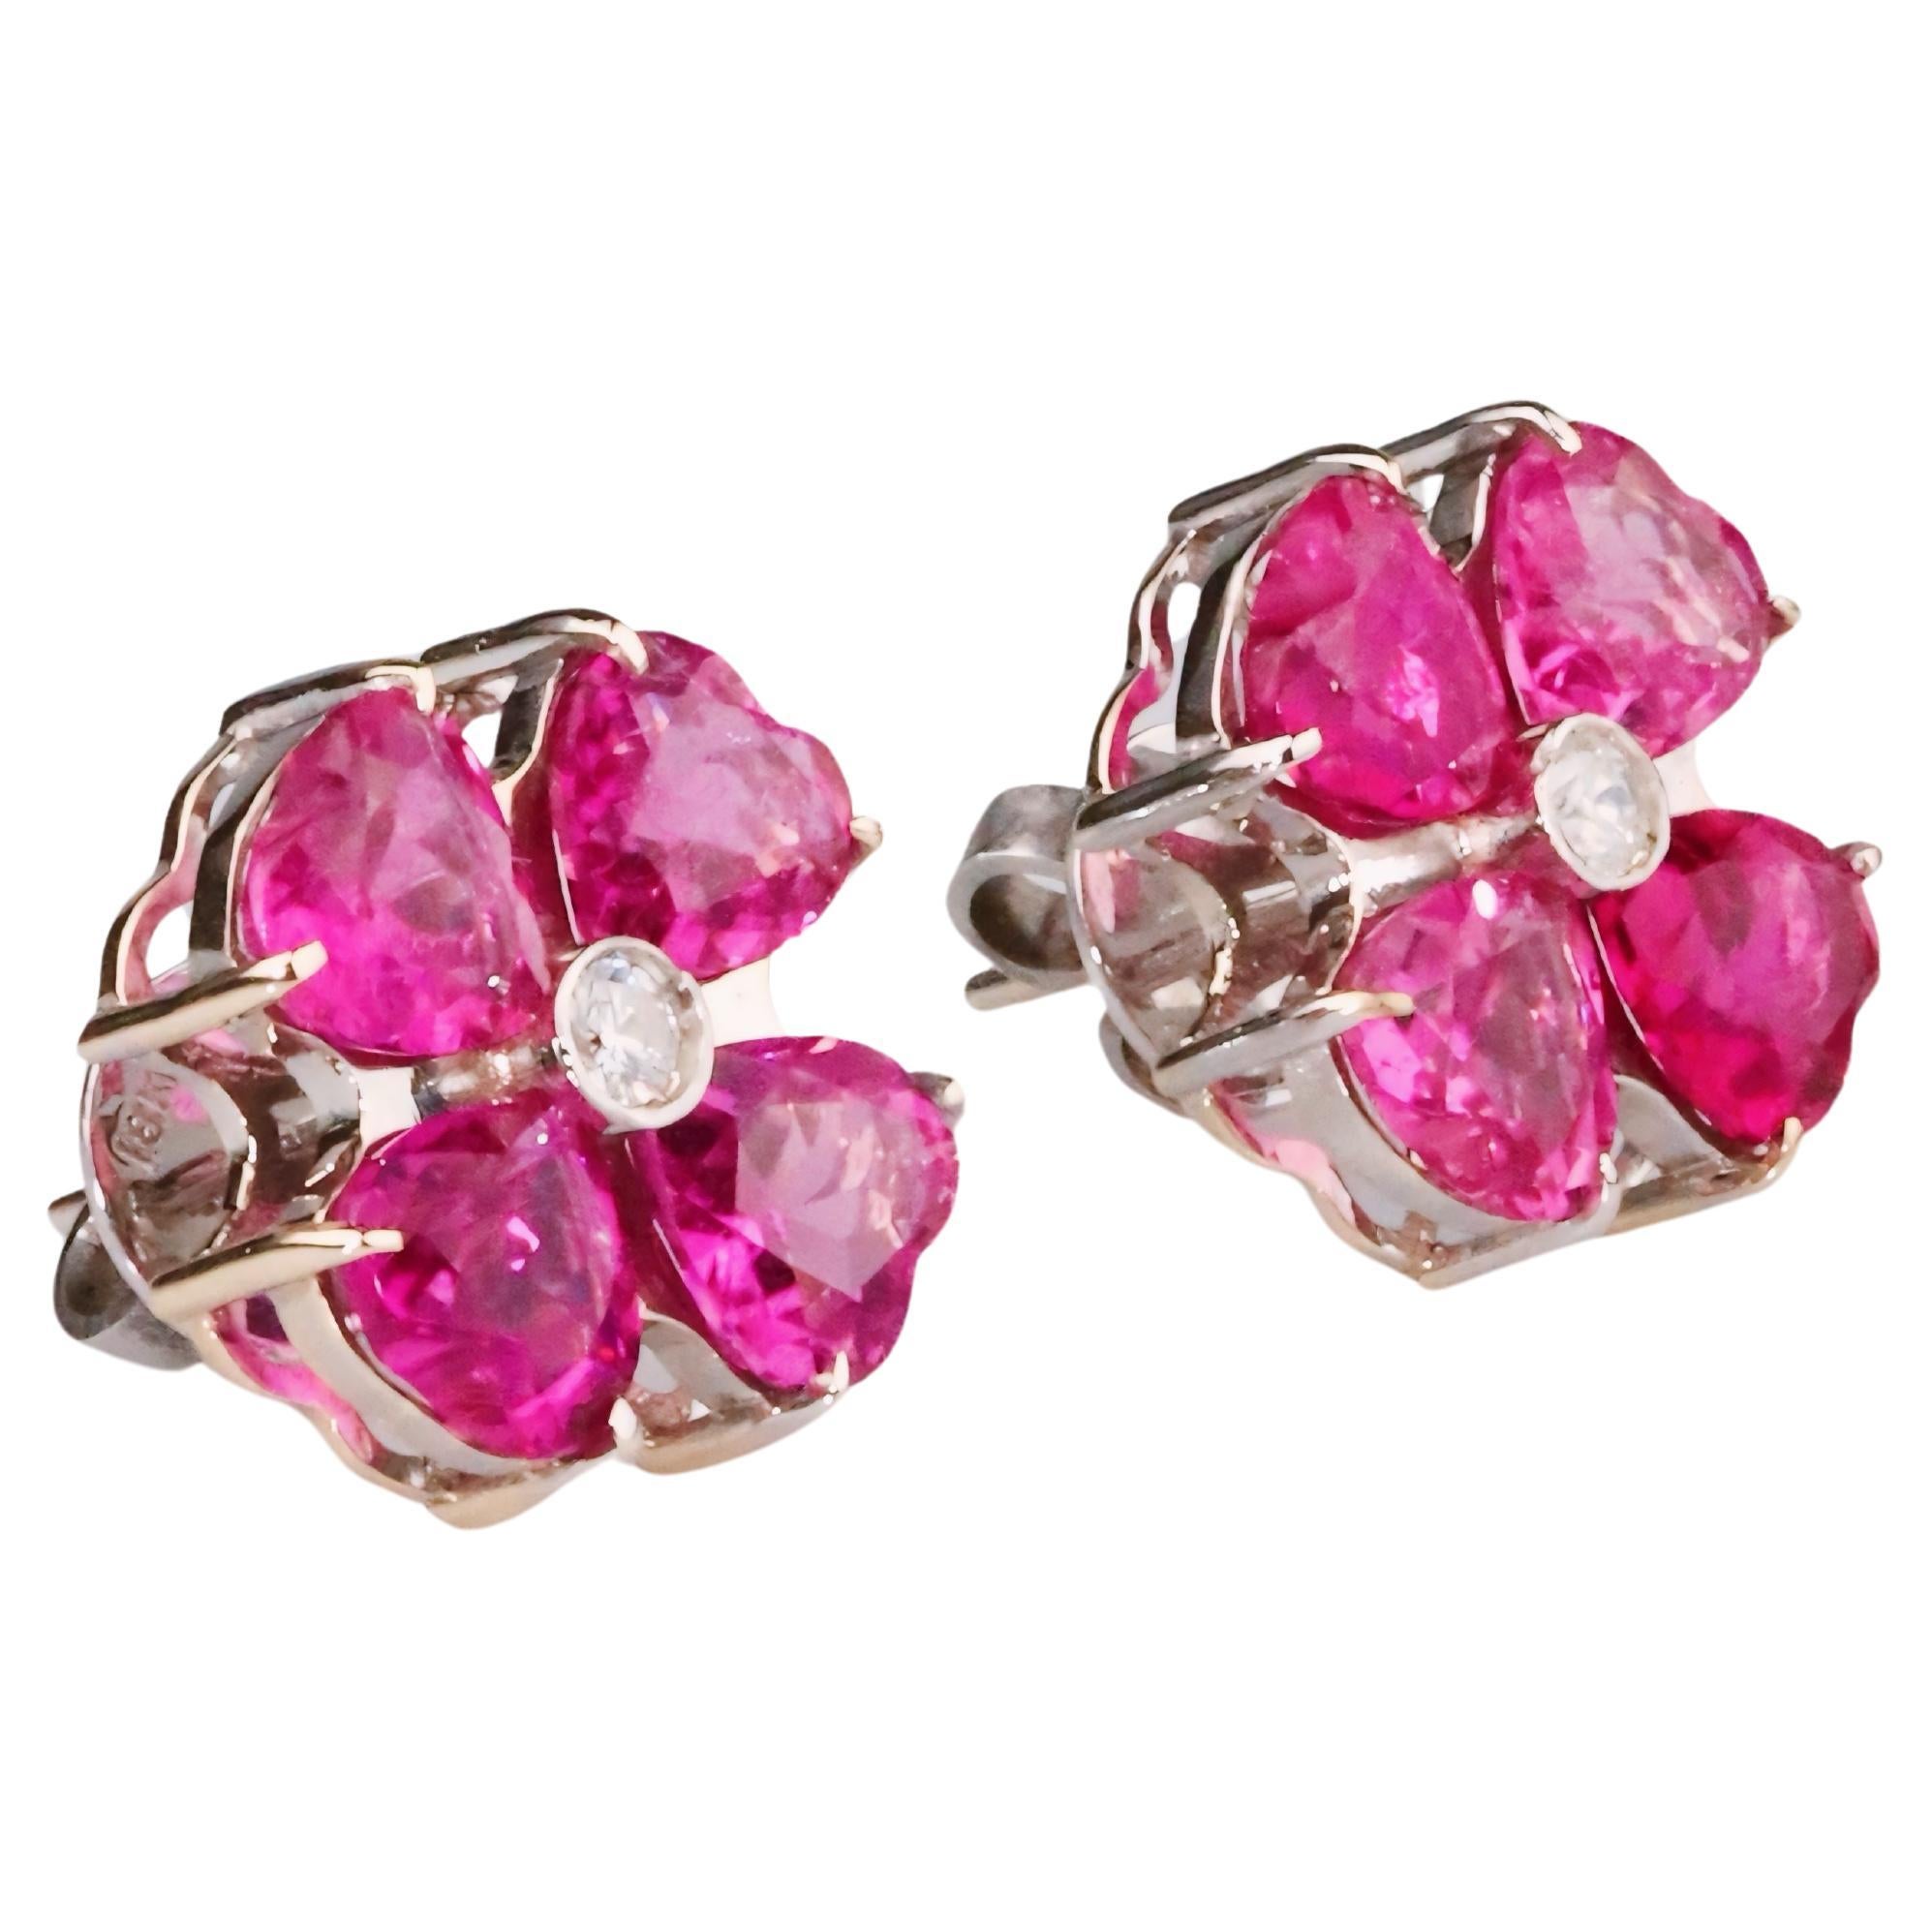 Pink Tourmaline Flower Earrings & Diamond - 18K Solid White Gold